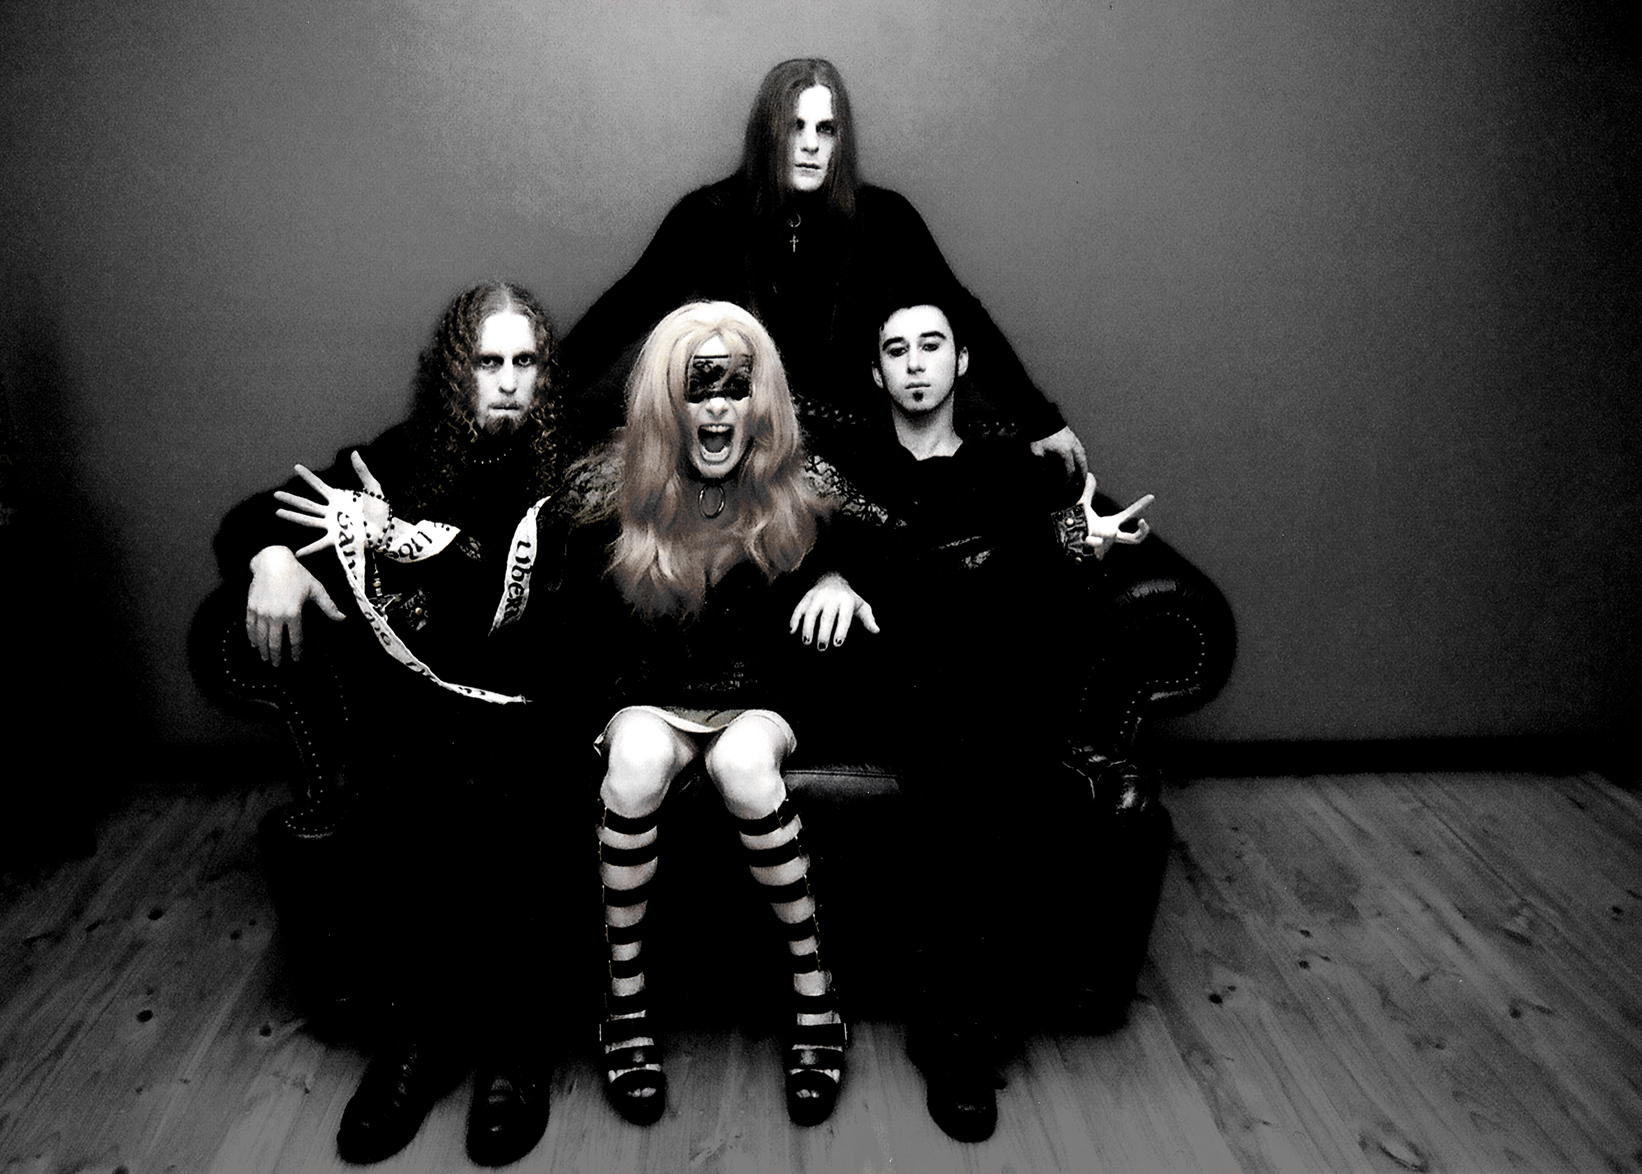 Virgin Black Gothic Metal Heavy Hard Rock Metal Dark Gothic Bands